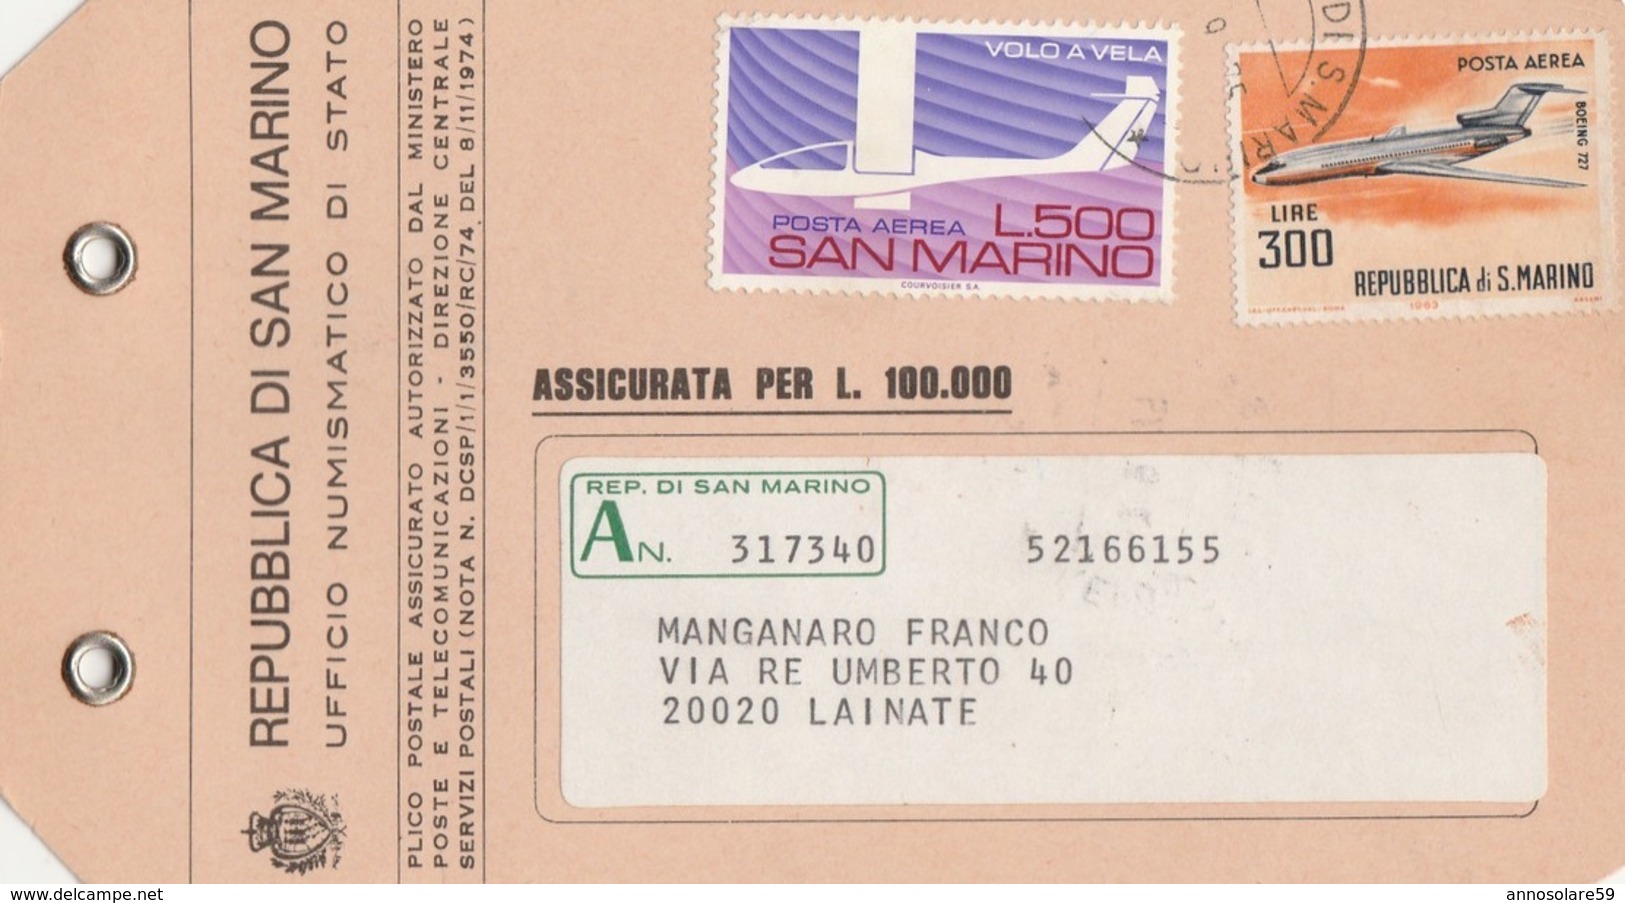 AIRPLANES - SAN MARINO - STORIA POSTALE - ETICHETTA PLICCO POSTALE - BELLISSIMA 1975 - LEGGI - Autres Modes De Transport